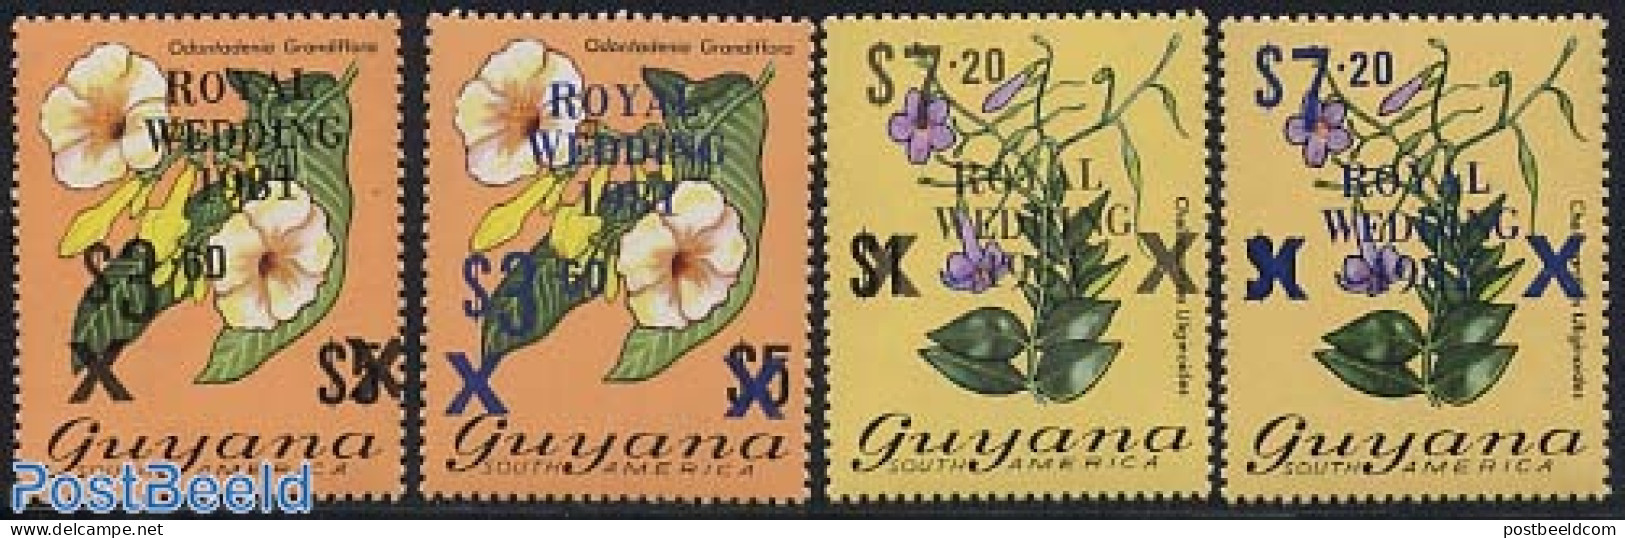 Guyana 1981 Royal Wedding 4v, Mint NH, History - Nature - Charles & Diana - Kings & Queens (Royalty) - Flowers & Plants - Königshäuser, Adel